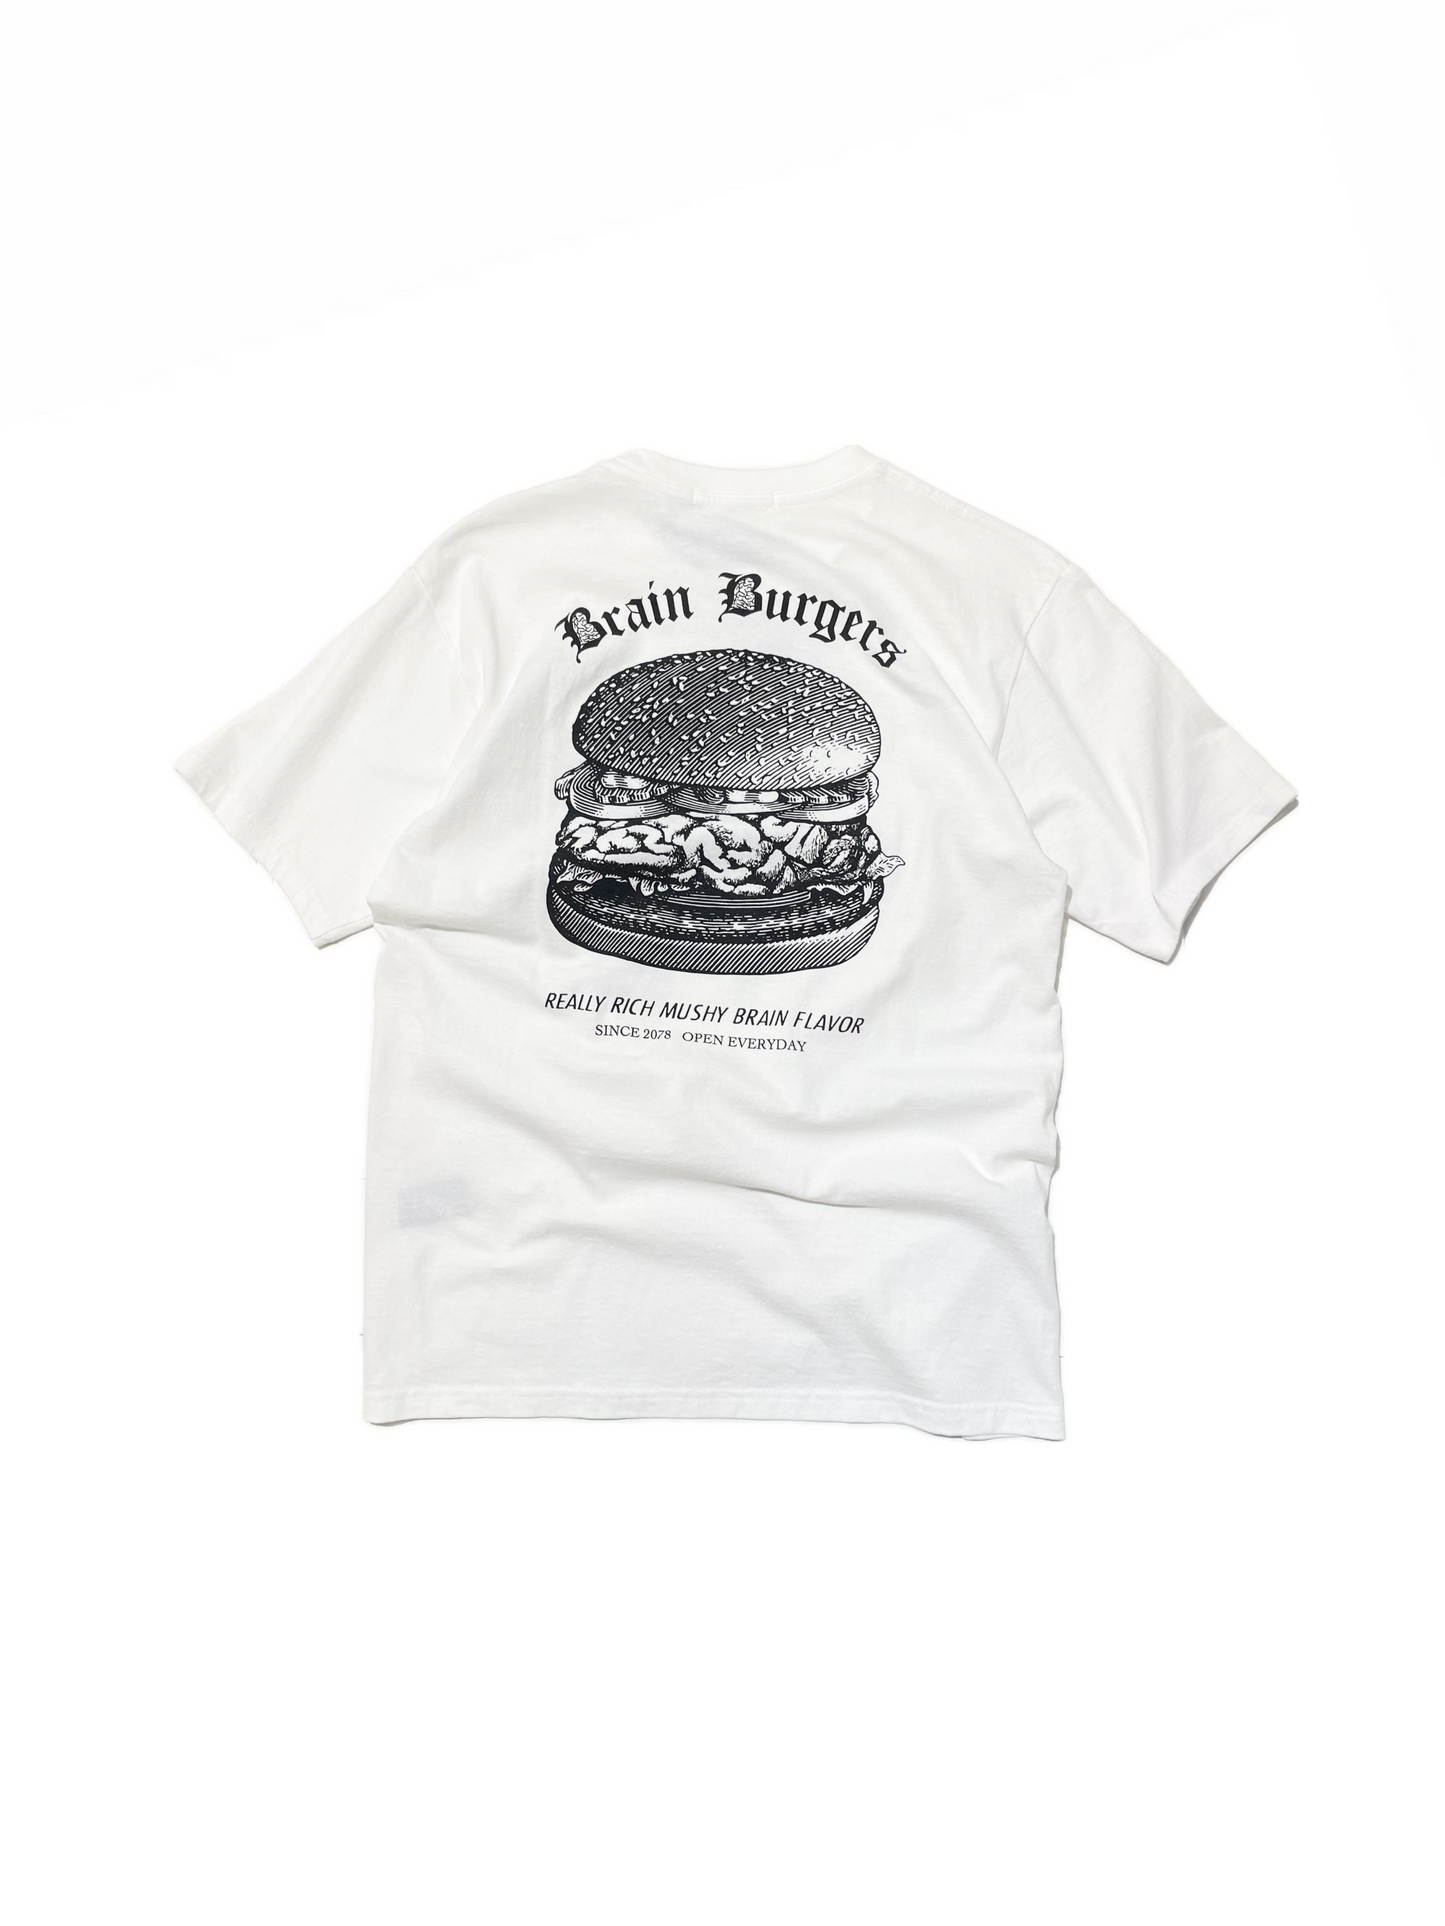 Undercover Brain Burgers T-Shirt